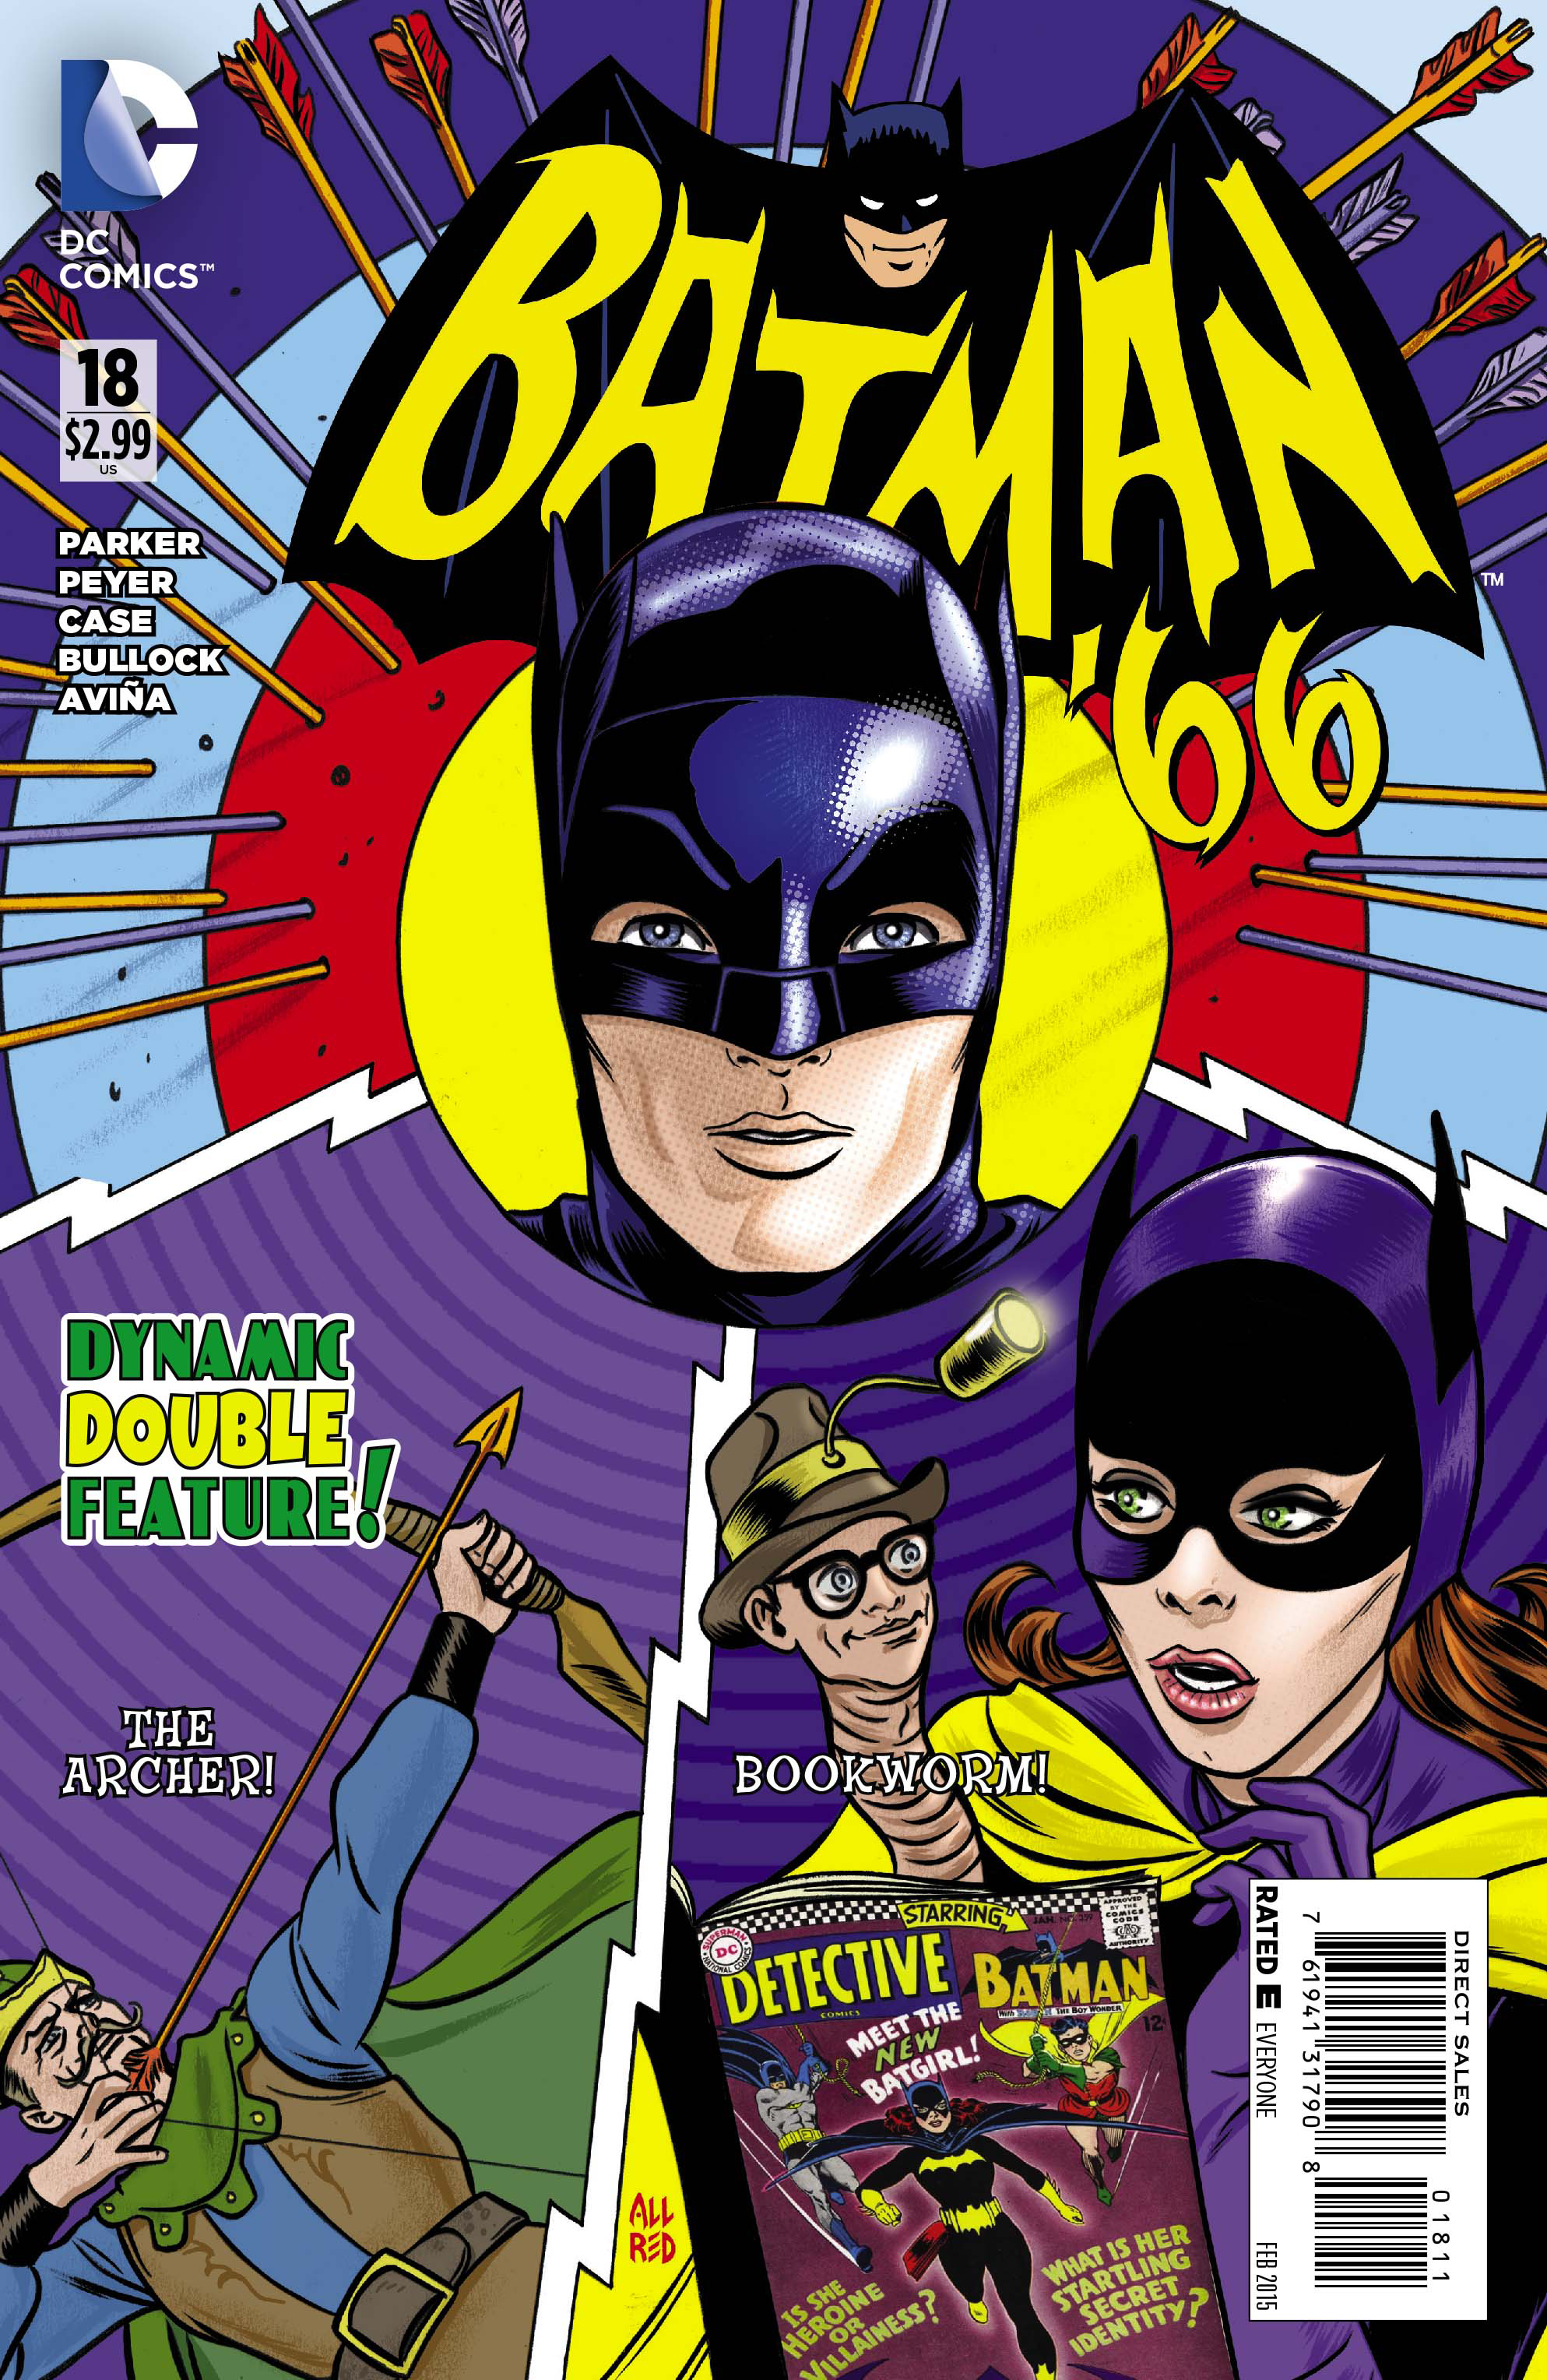 BATMAN 66 #18